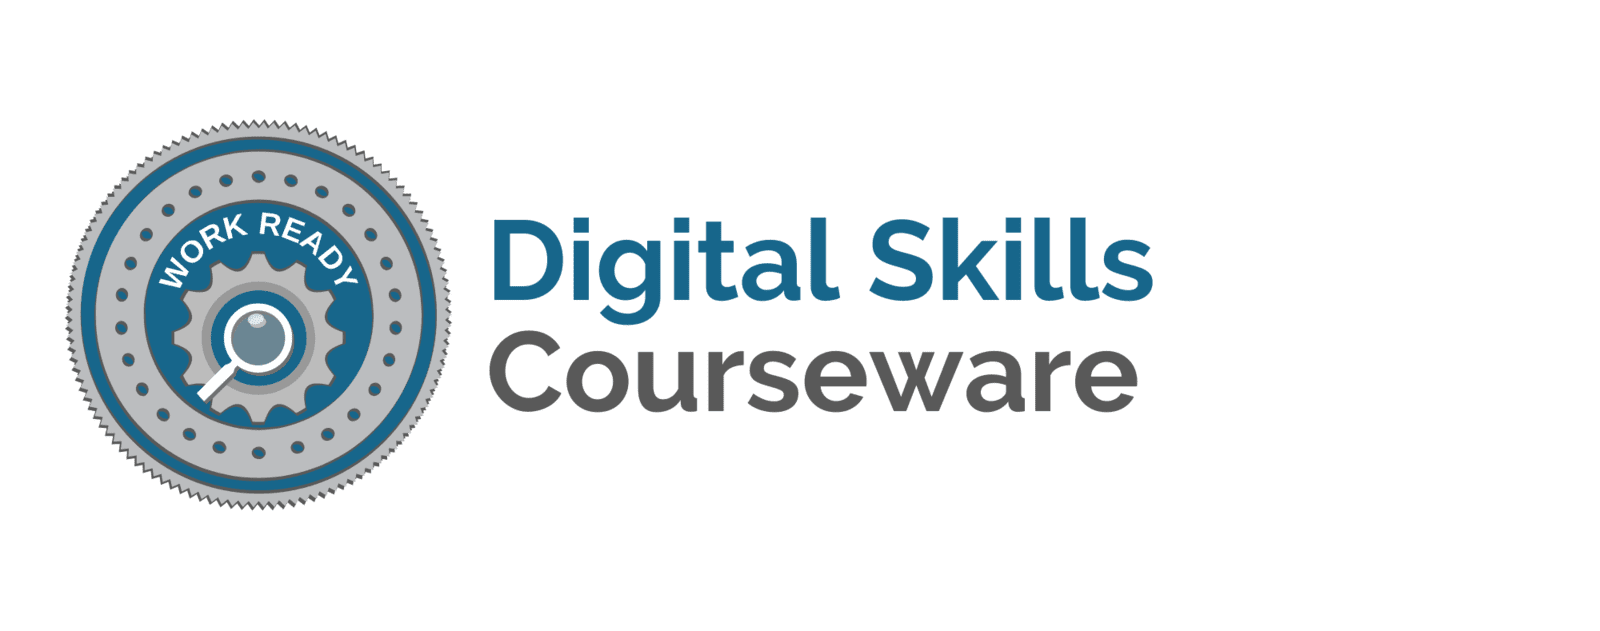 Digital Skills Courseware logo